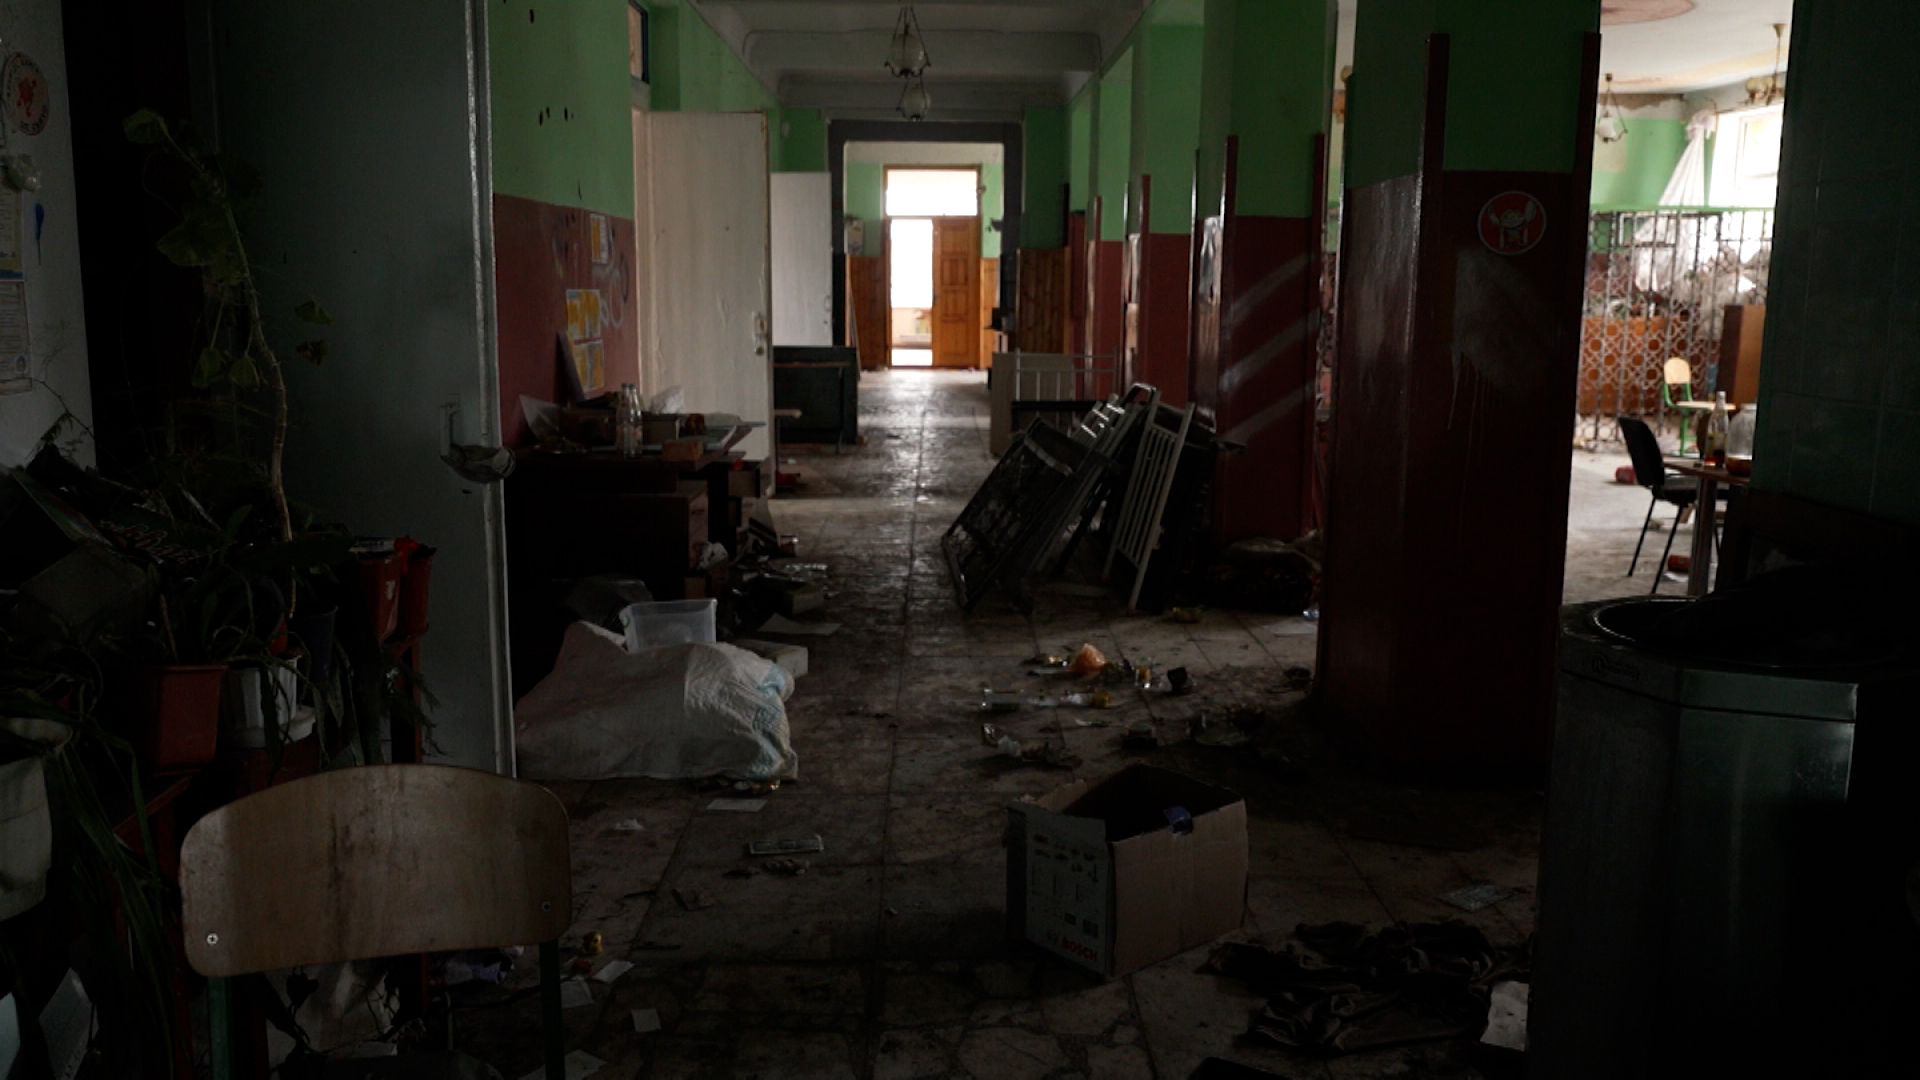 CNN tours Ukrainian villages decimated by Russian troops